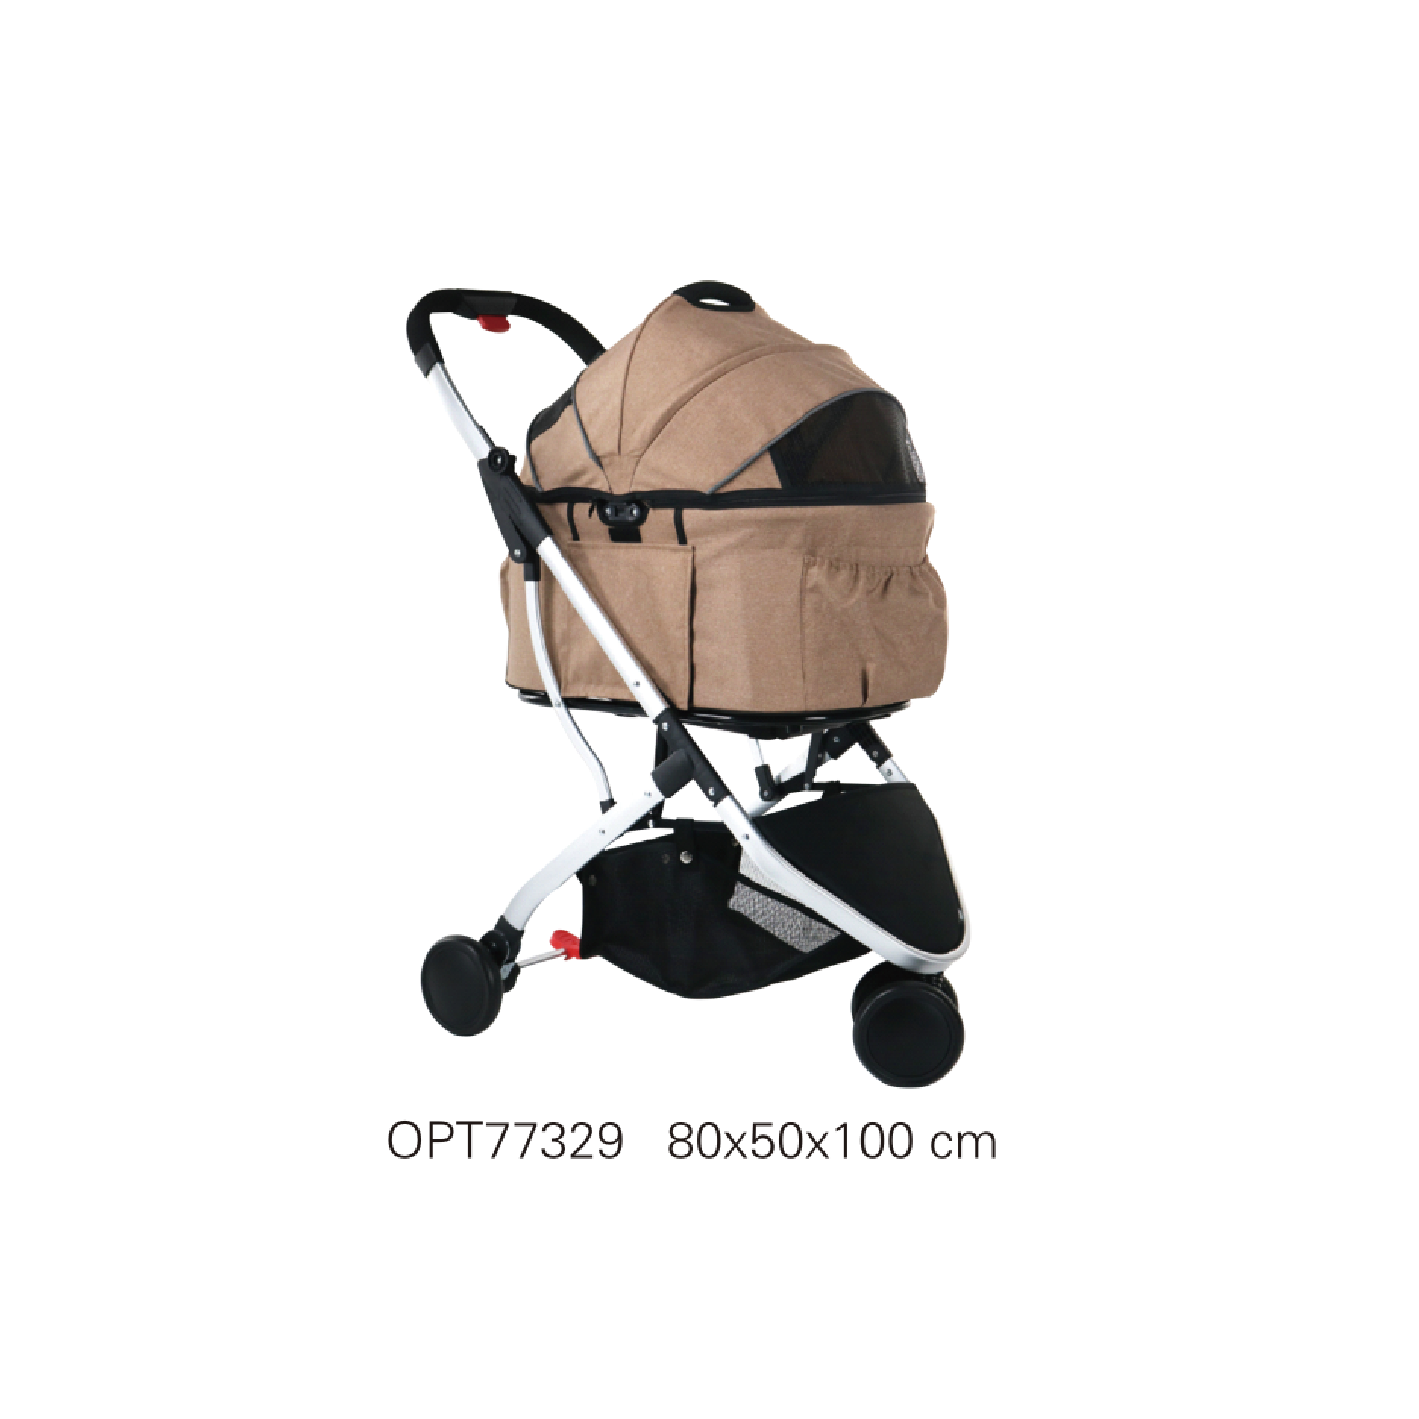 OPT77329 Pet strollers